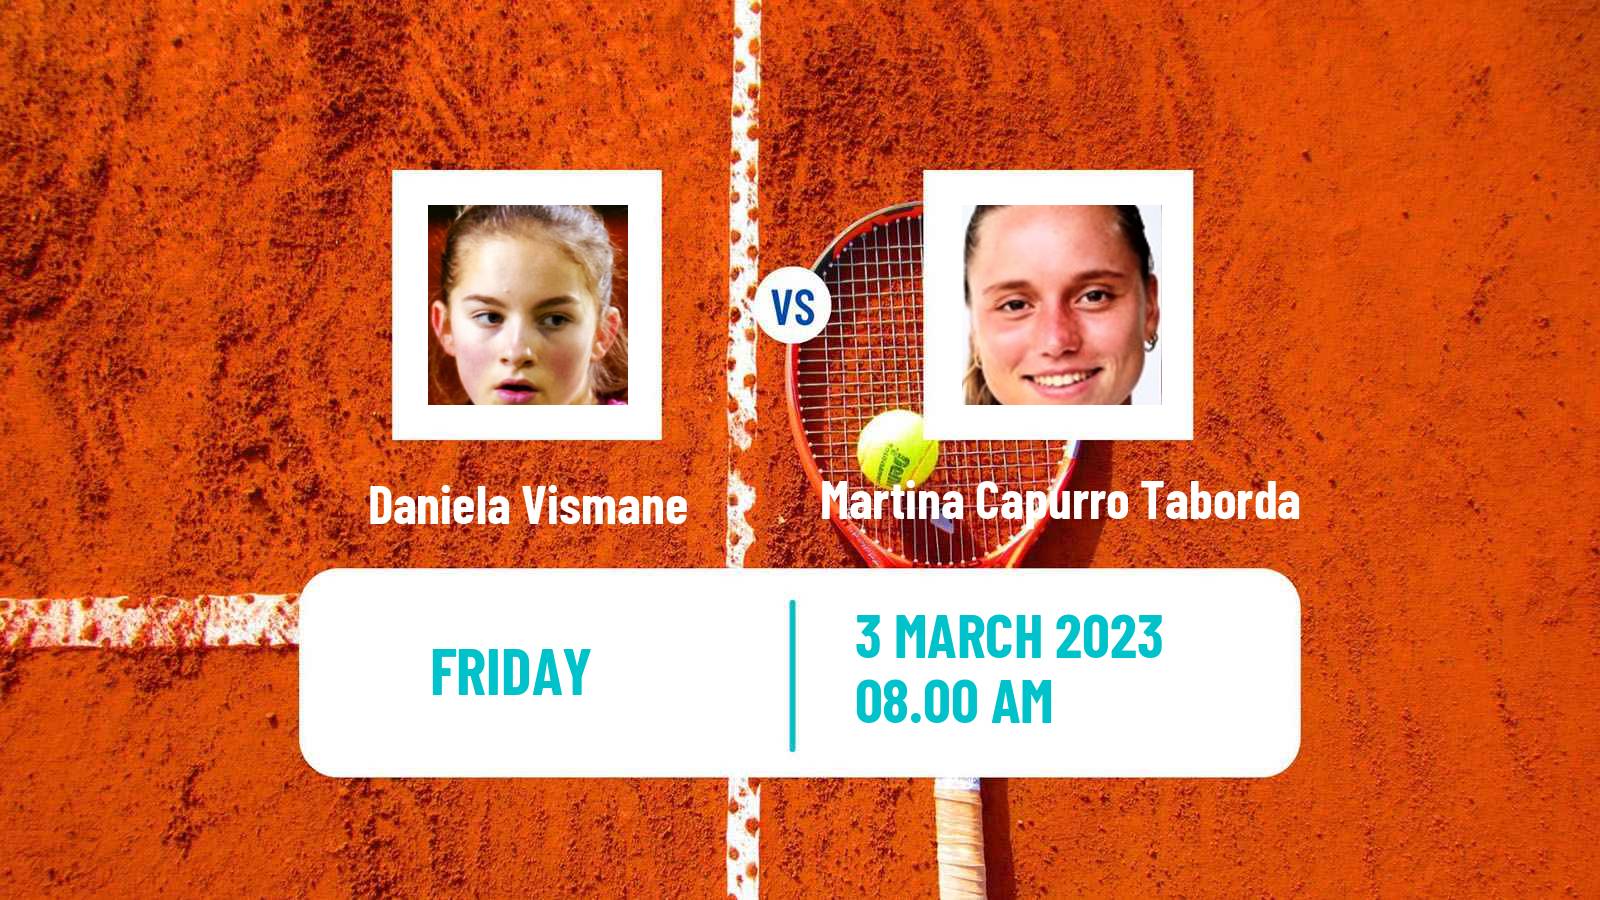 Tennis ITF Tournaments Daniela Vismane - Martina Capurro Taborda